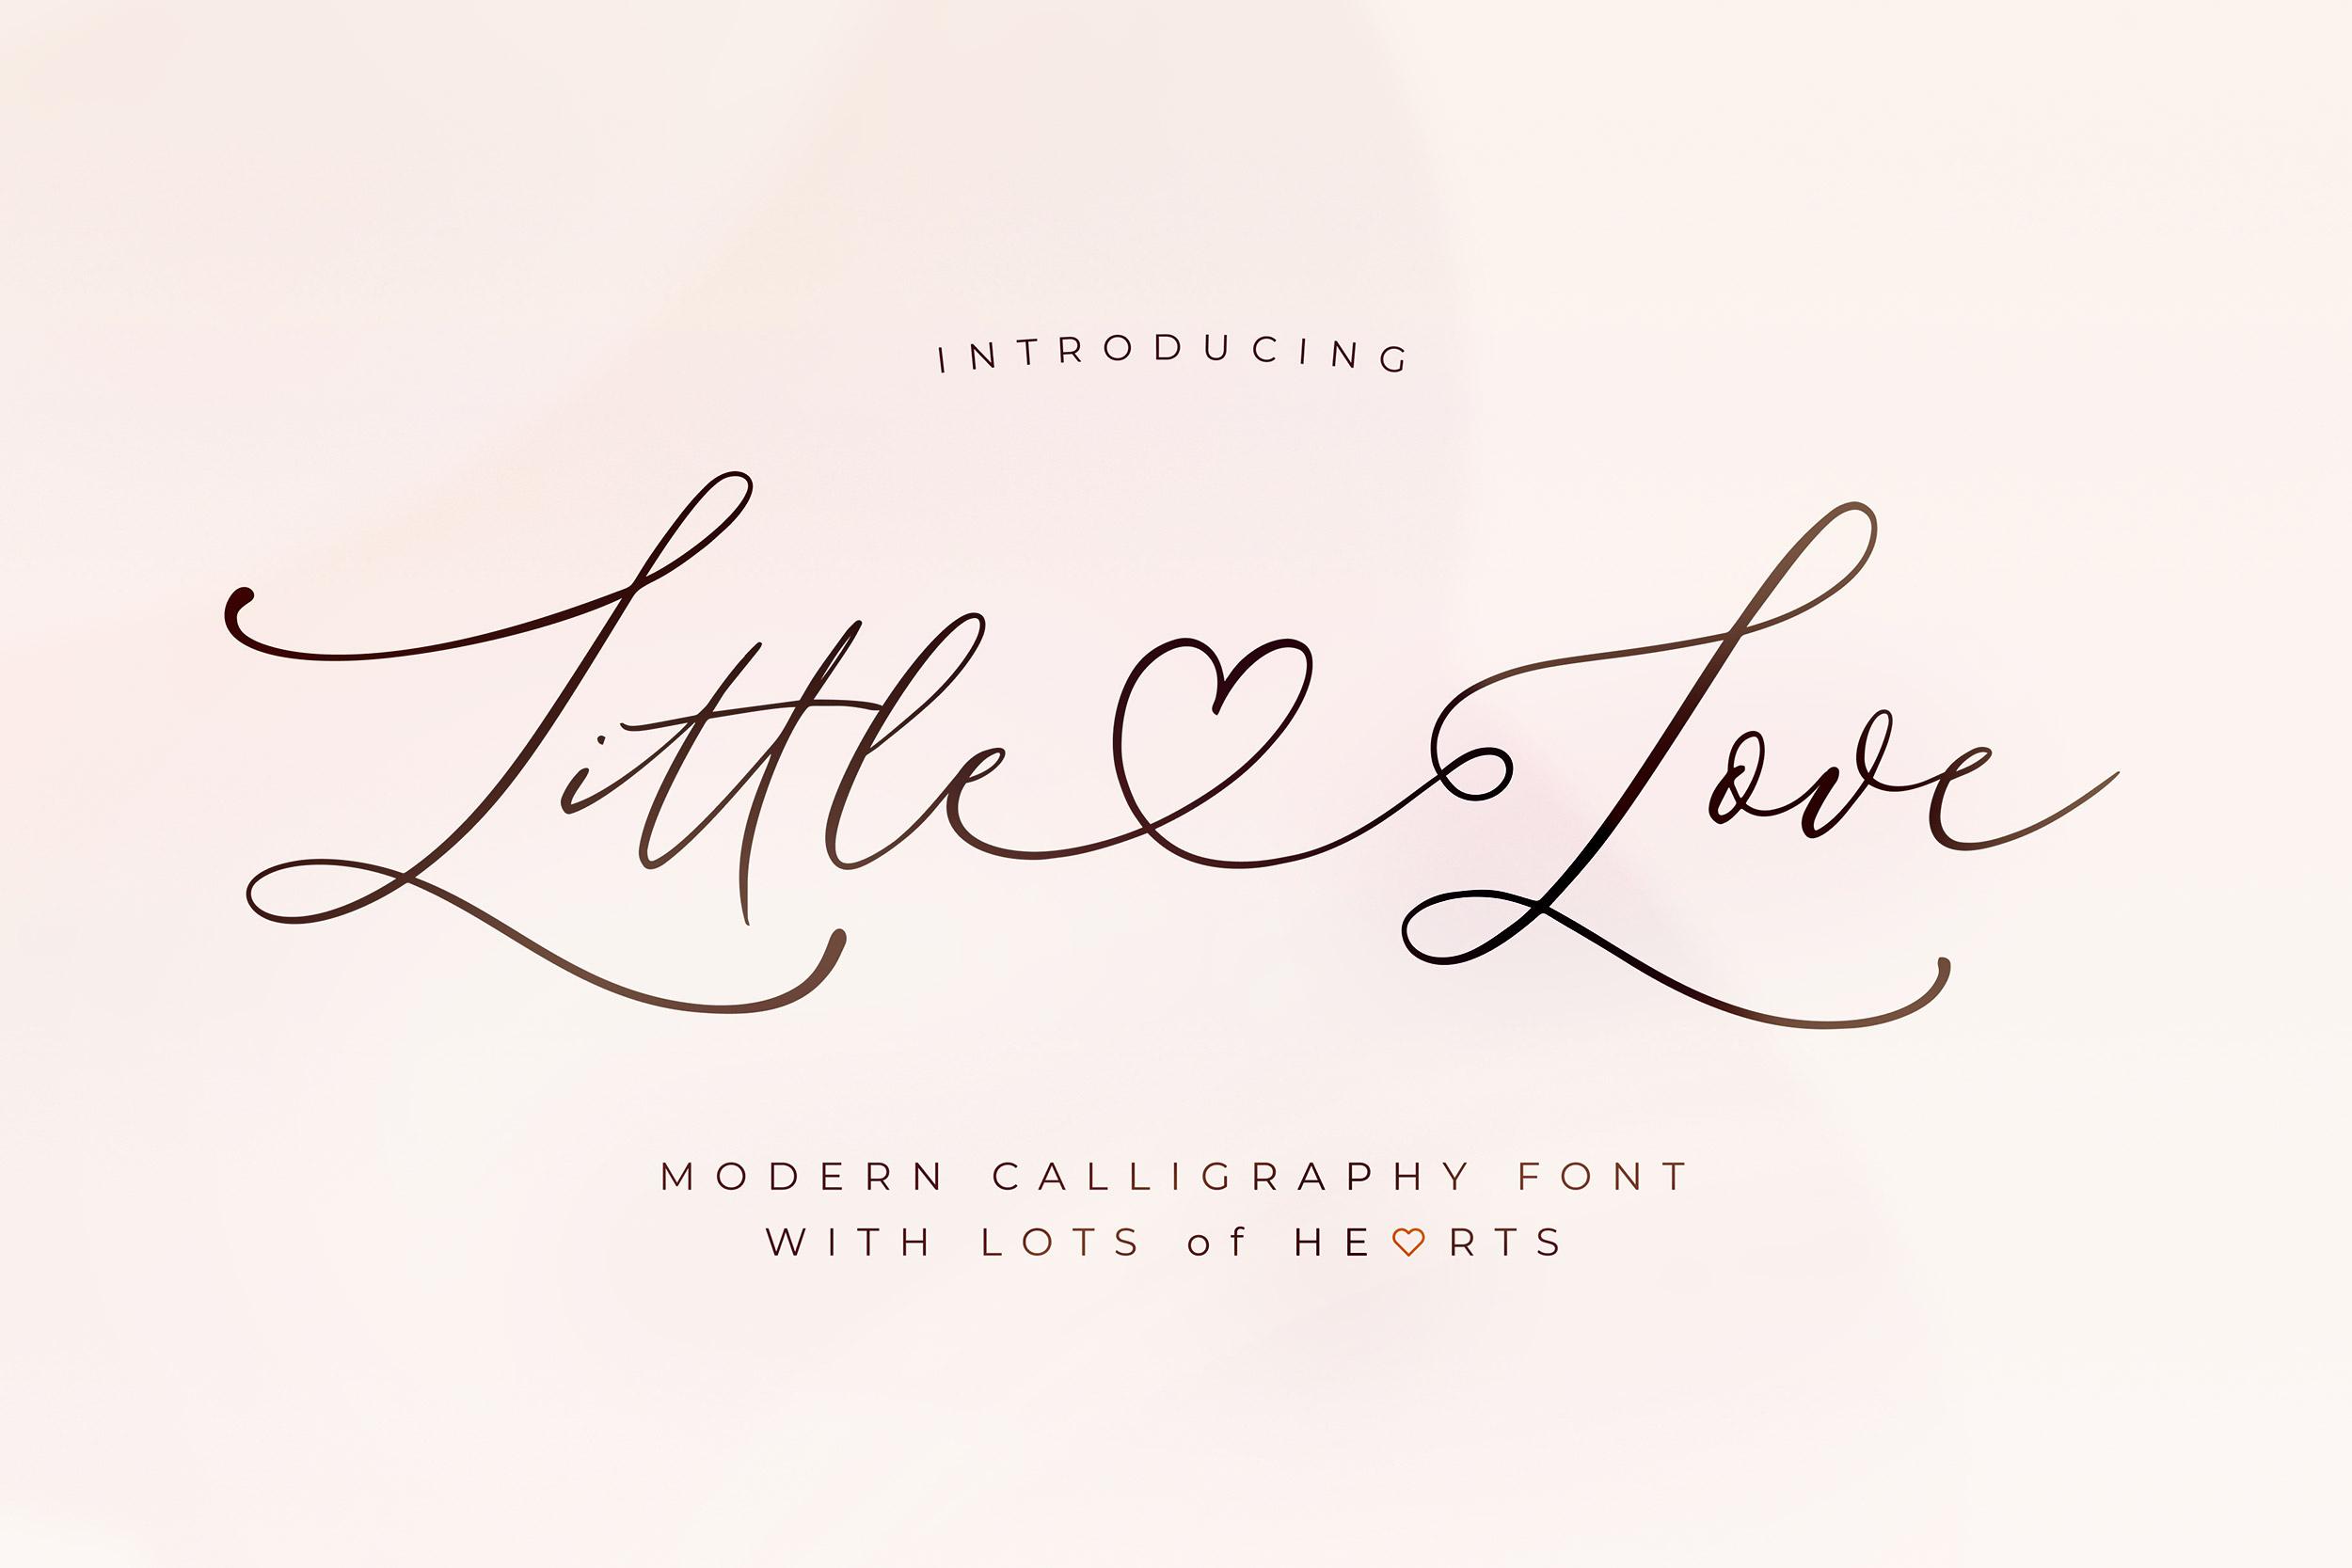 Little Love Font